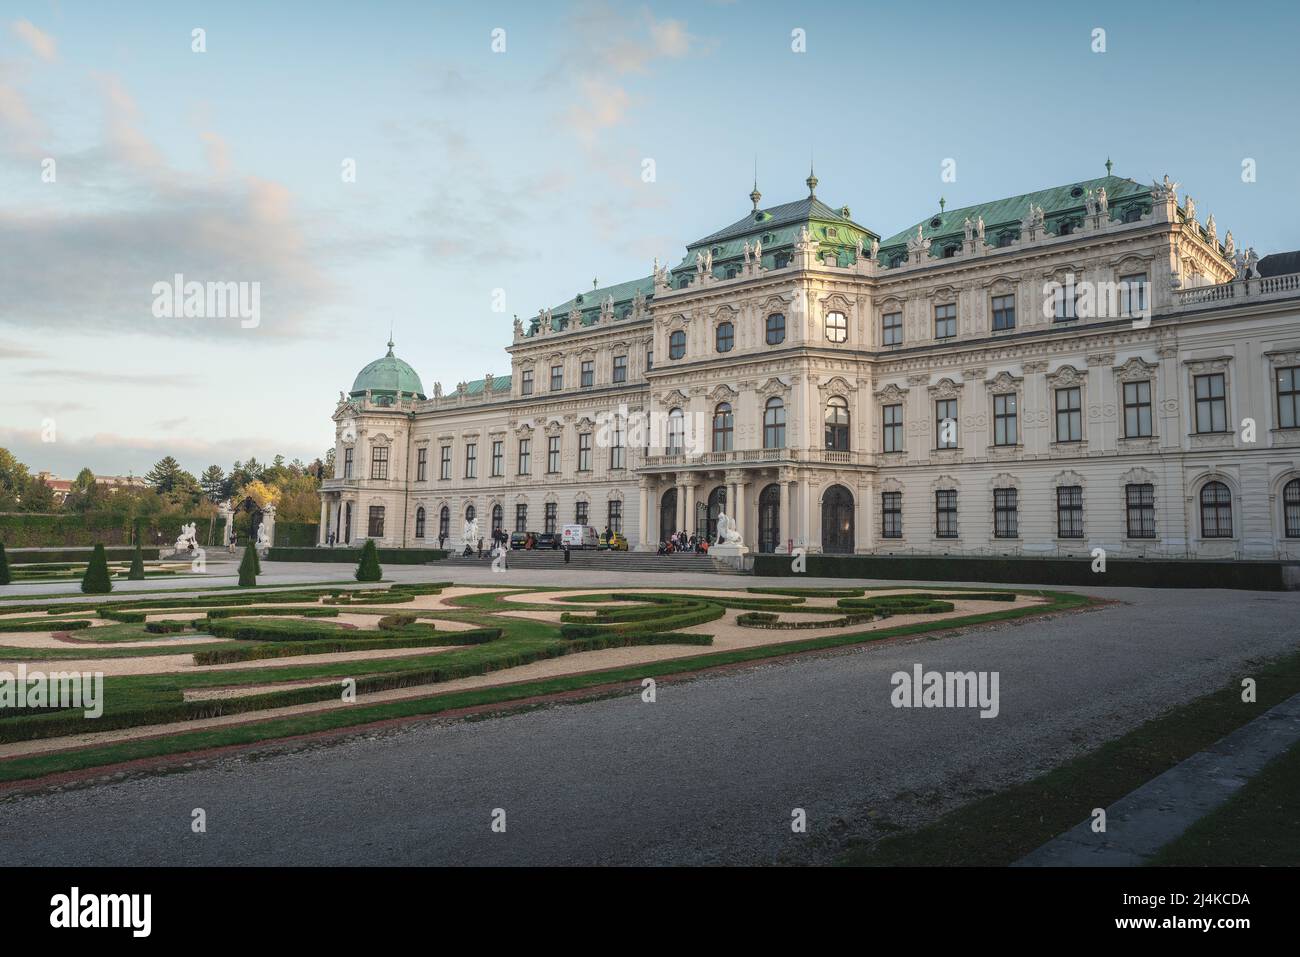 Upper Belvedere Palace - Vienna, Austria Stock Photo